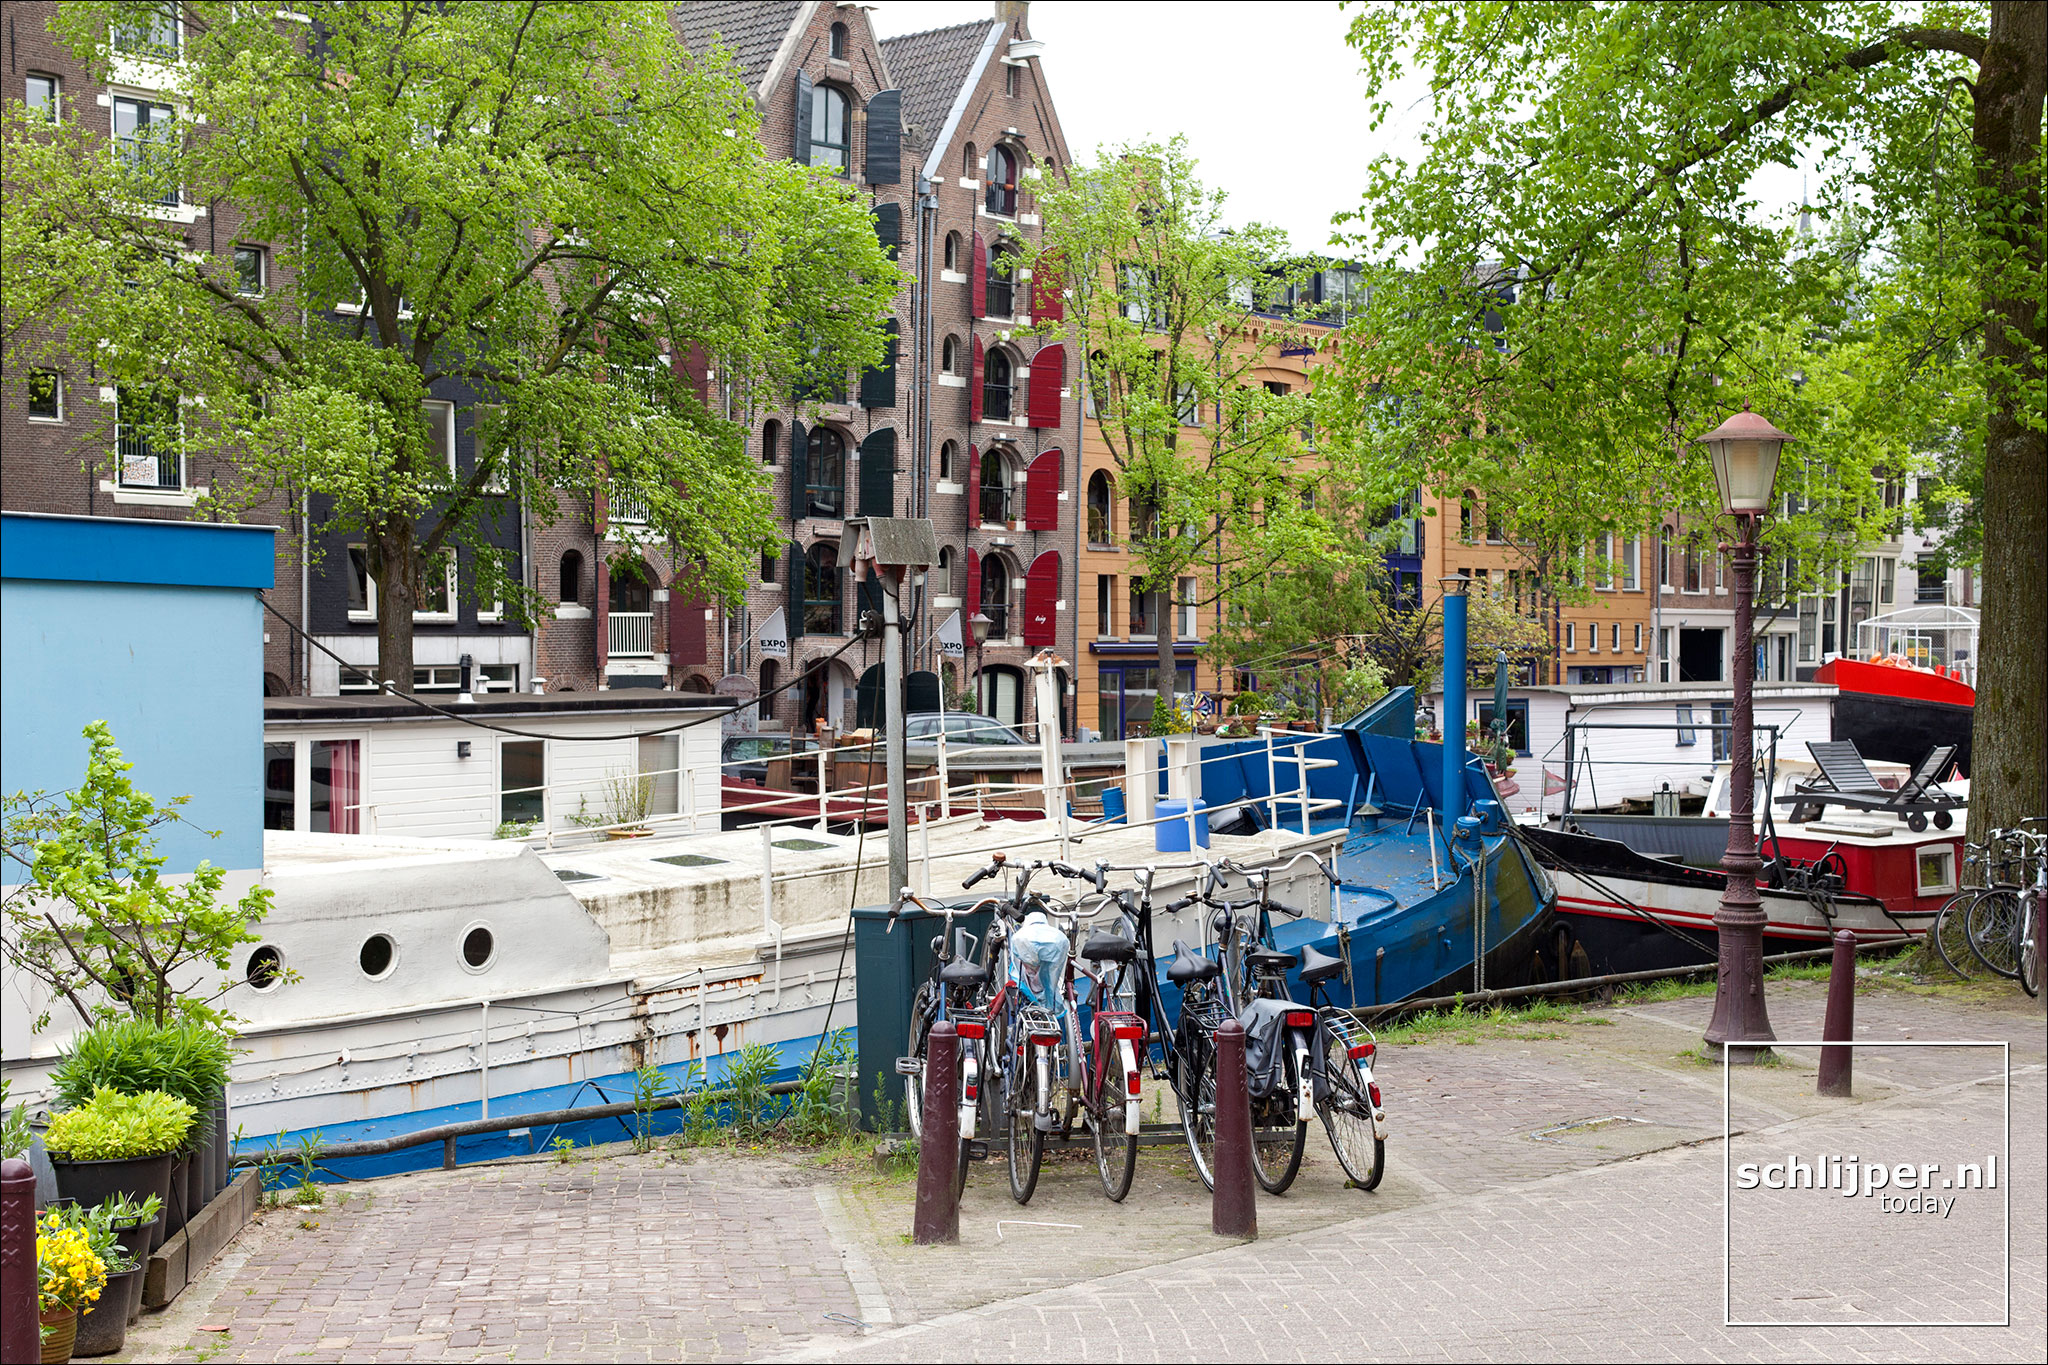 Nederland, Amsterdam, 11 mei 2012